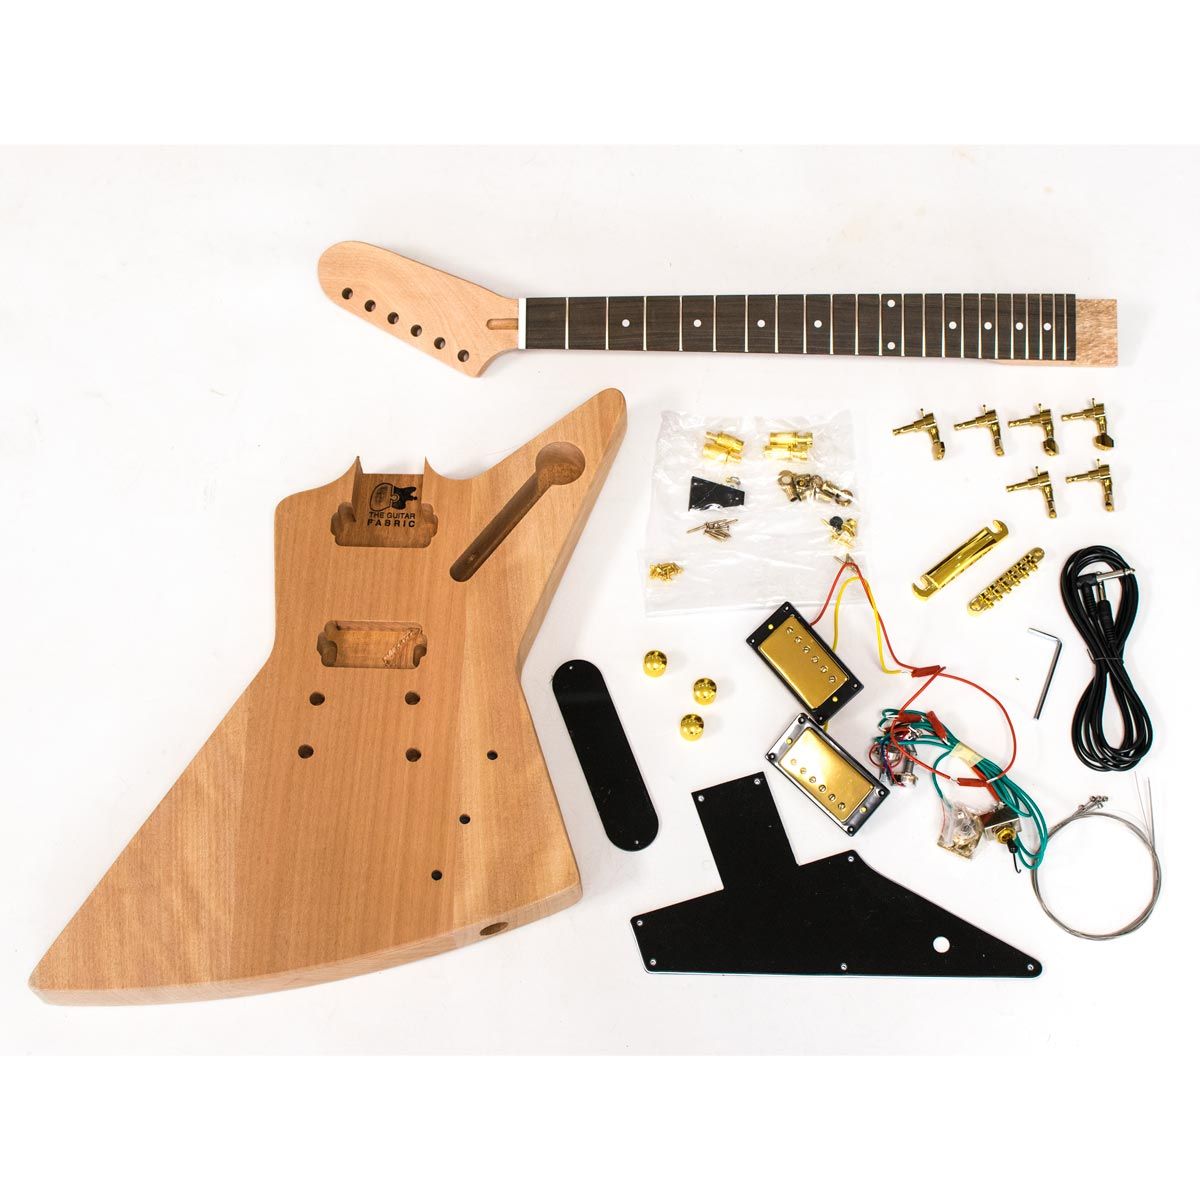 DiY Guitar Kits  The Guitar Kit Fabric